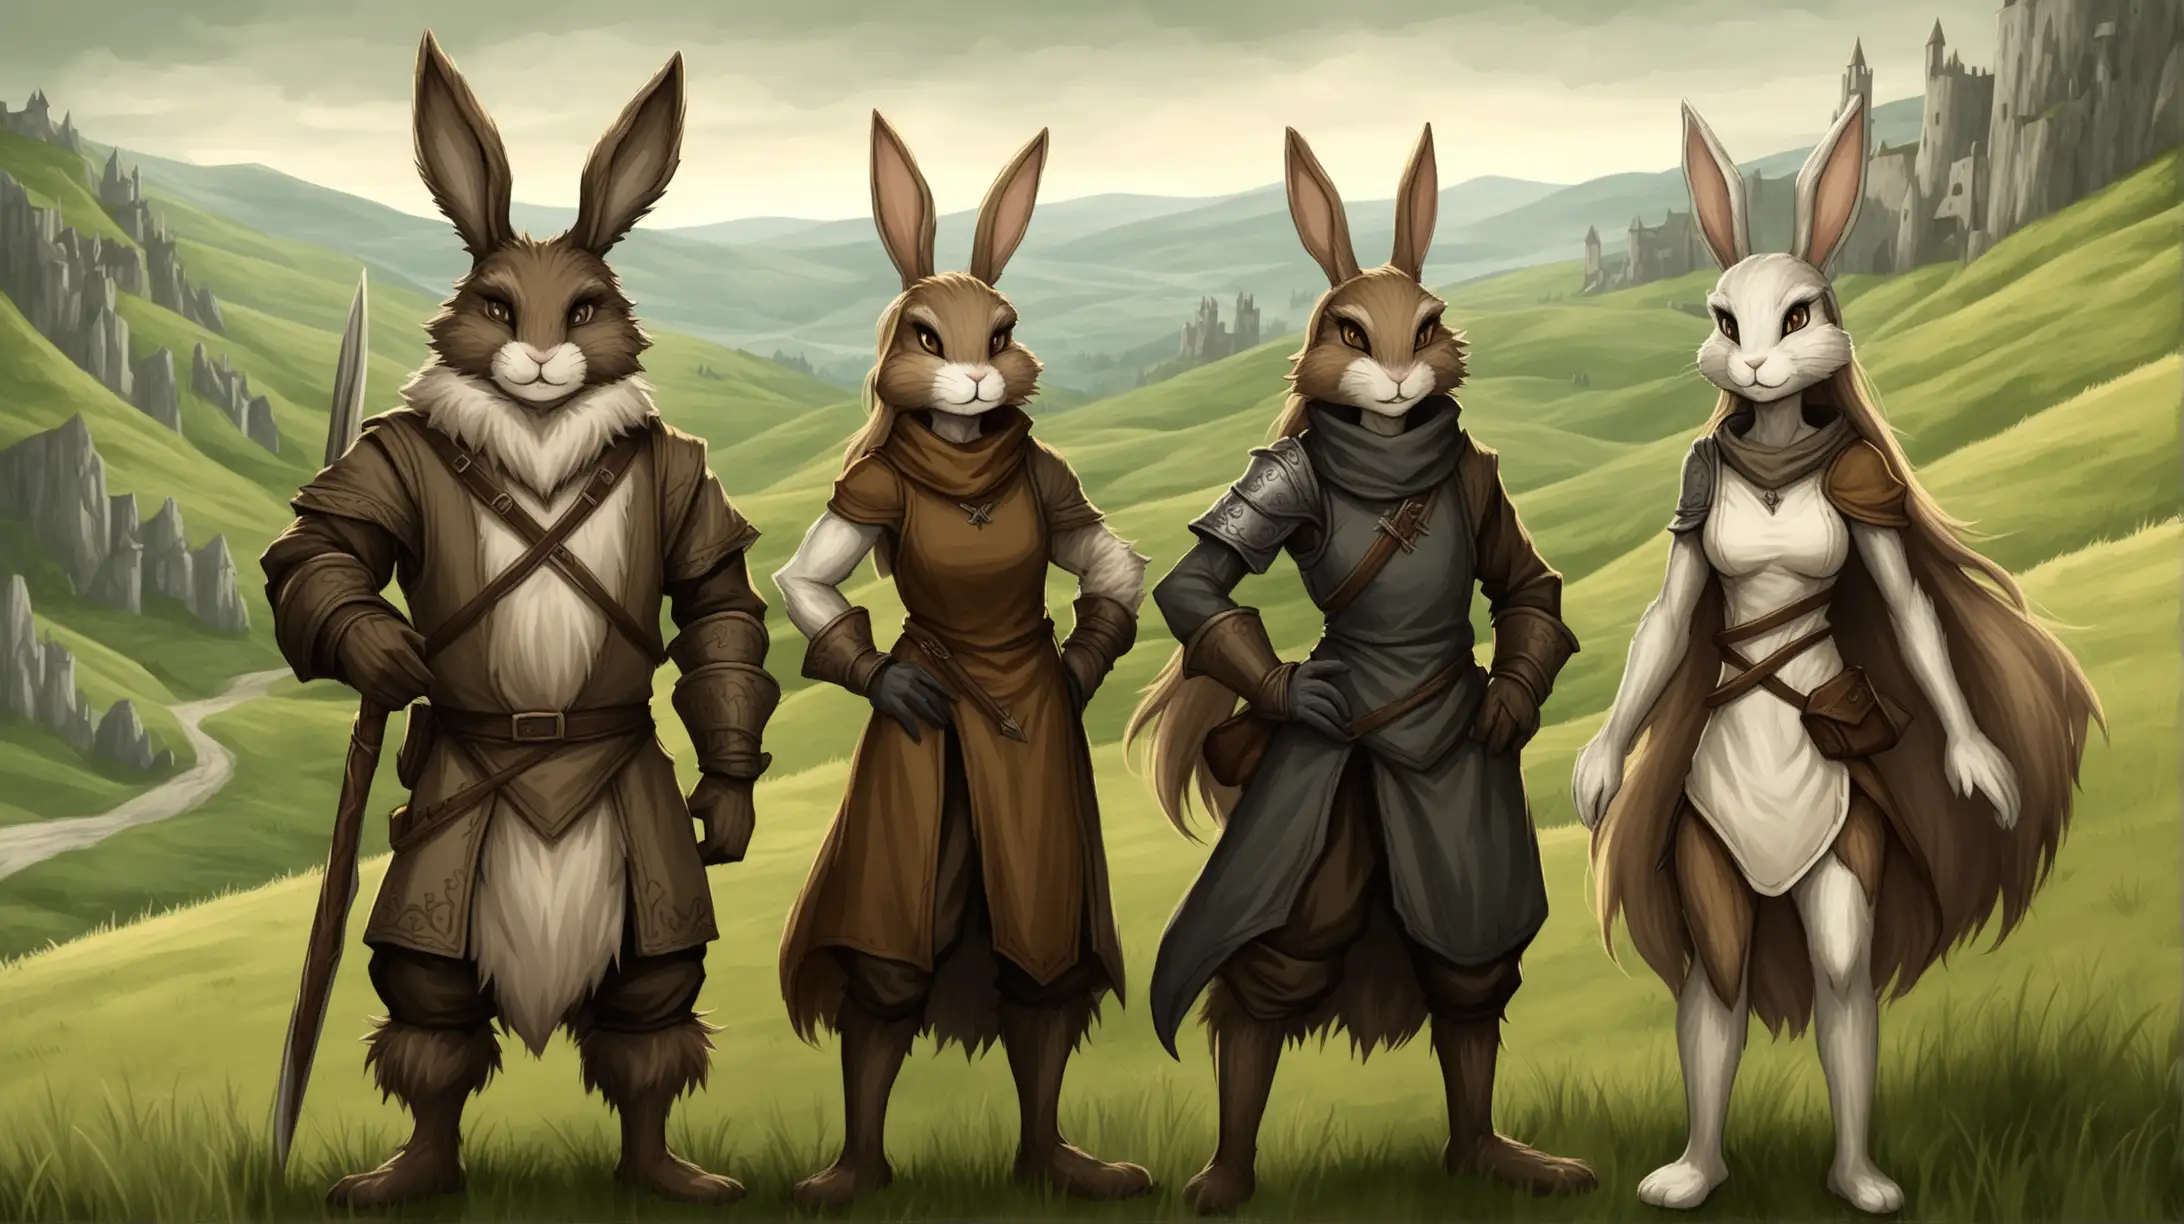 Medieval Fantasy Rabbit Folk Rogues and Warriors on Grassy Hills